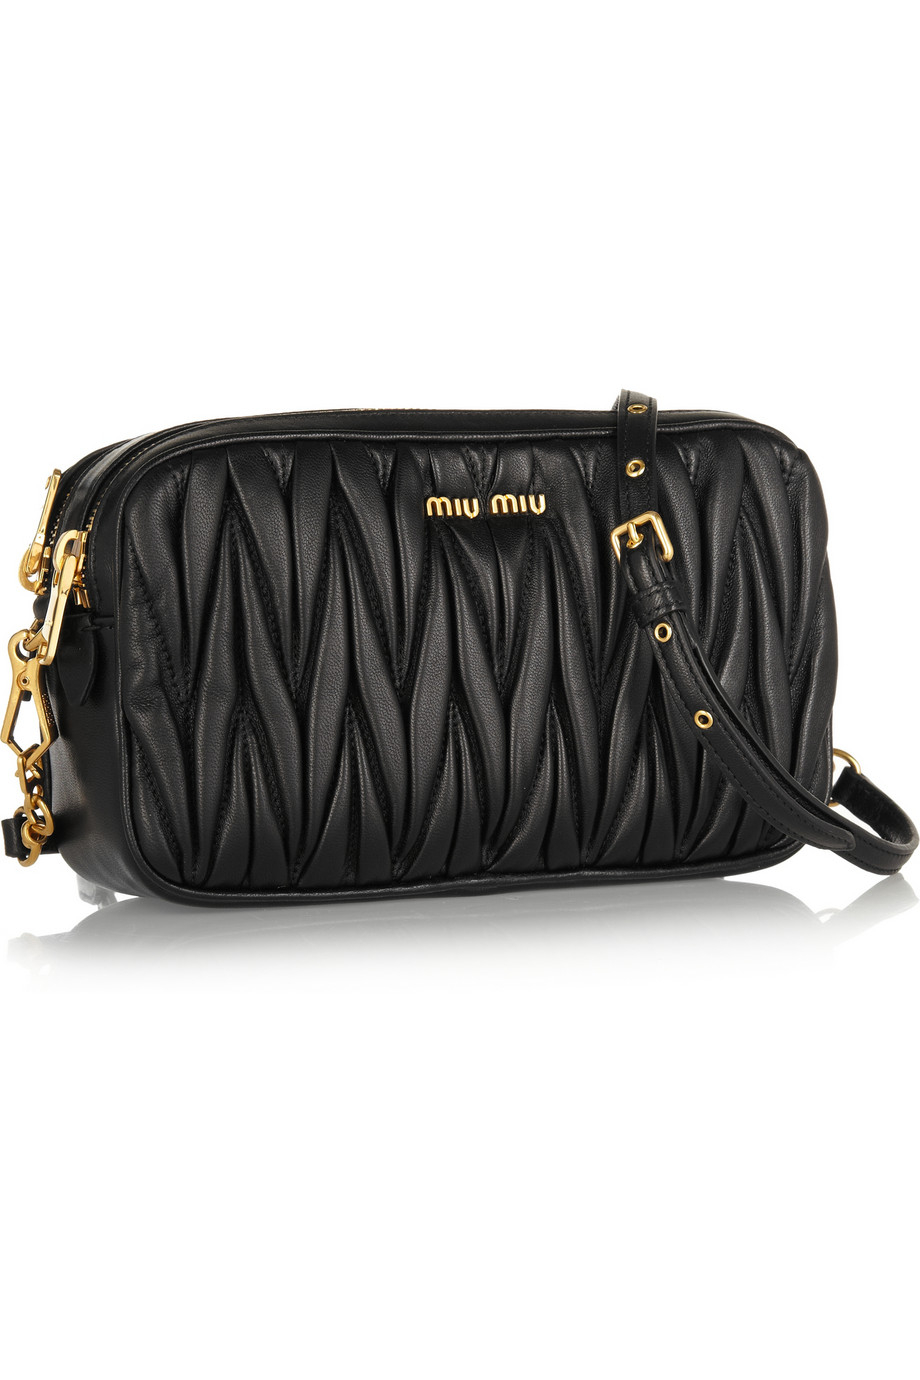 Miu Miu Matelassé Leather Shoulder Bag in Black - Lyst